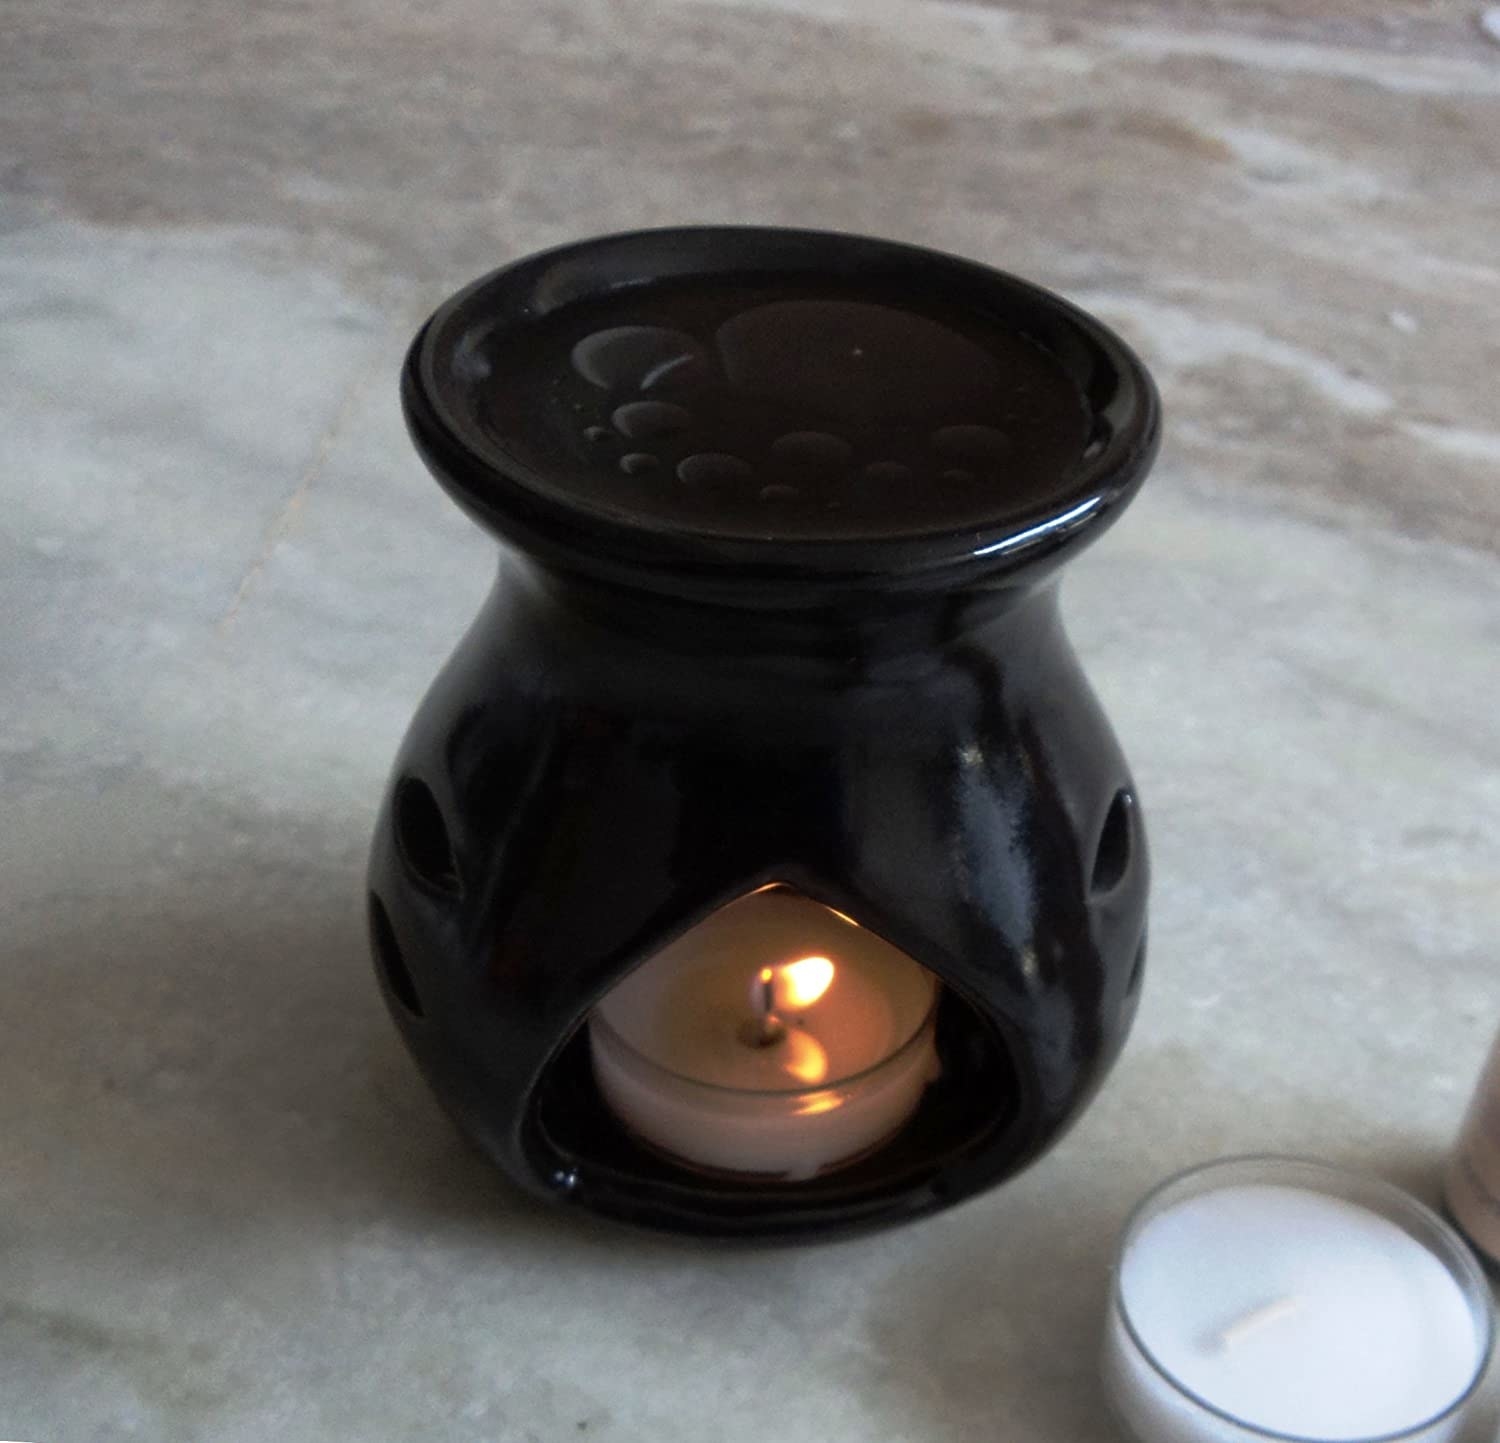 A black essential oil burner.